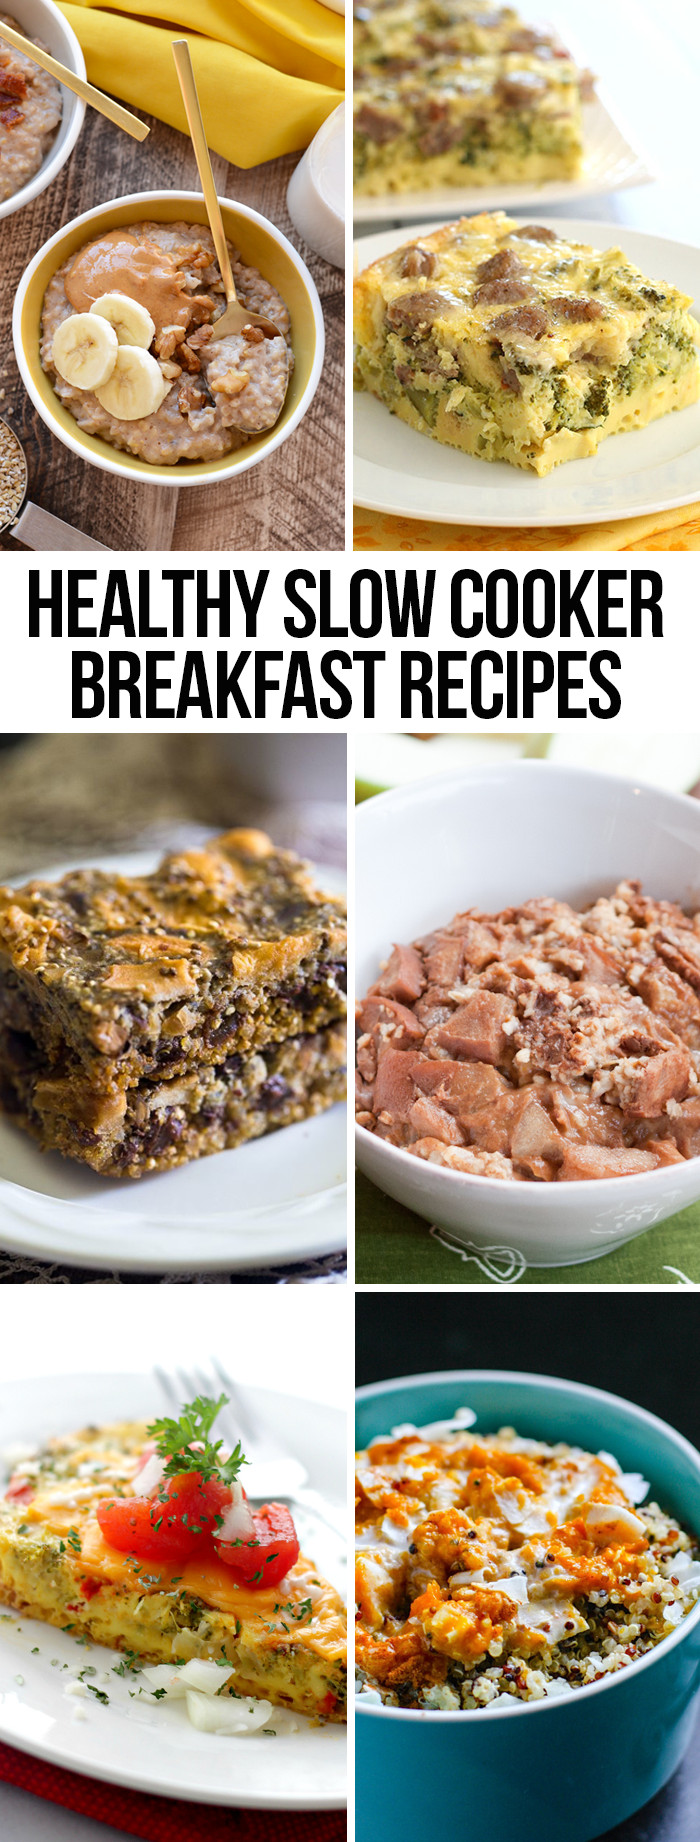 Healthy Recipes For Breakfast
 Healthy Slow Cooker Breakfast Recipes